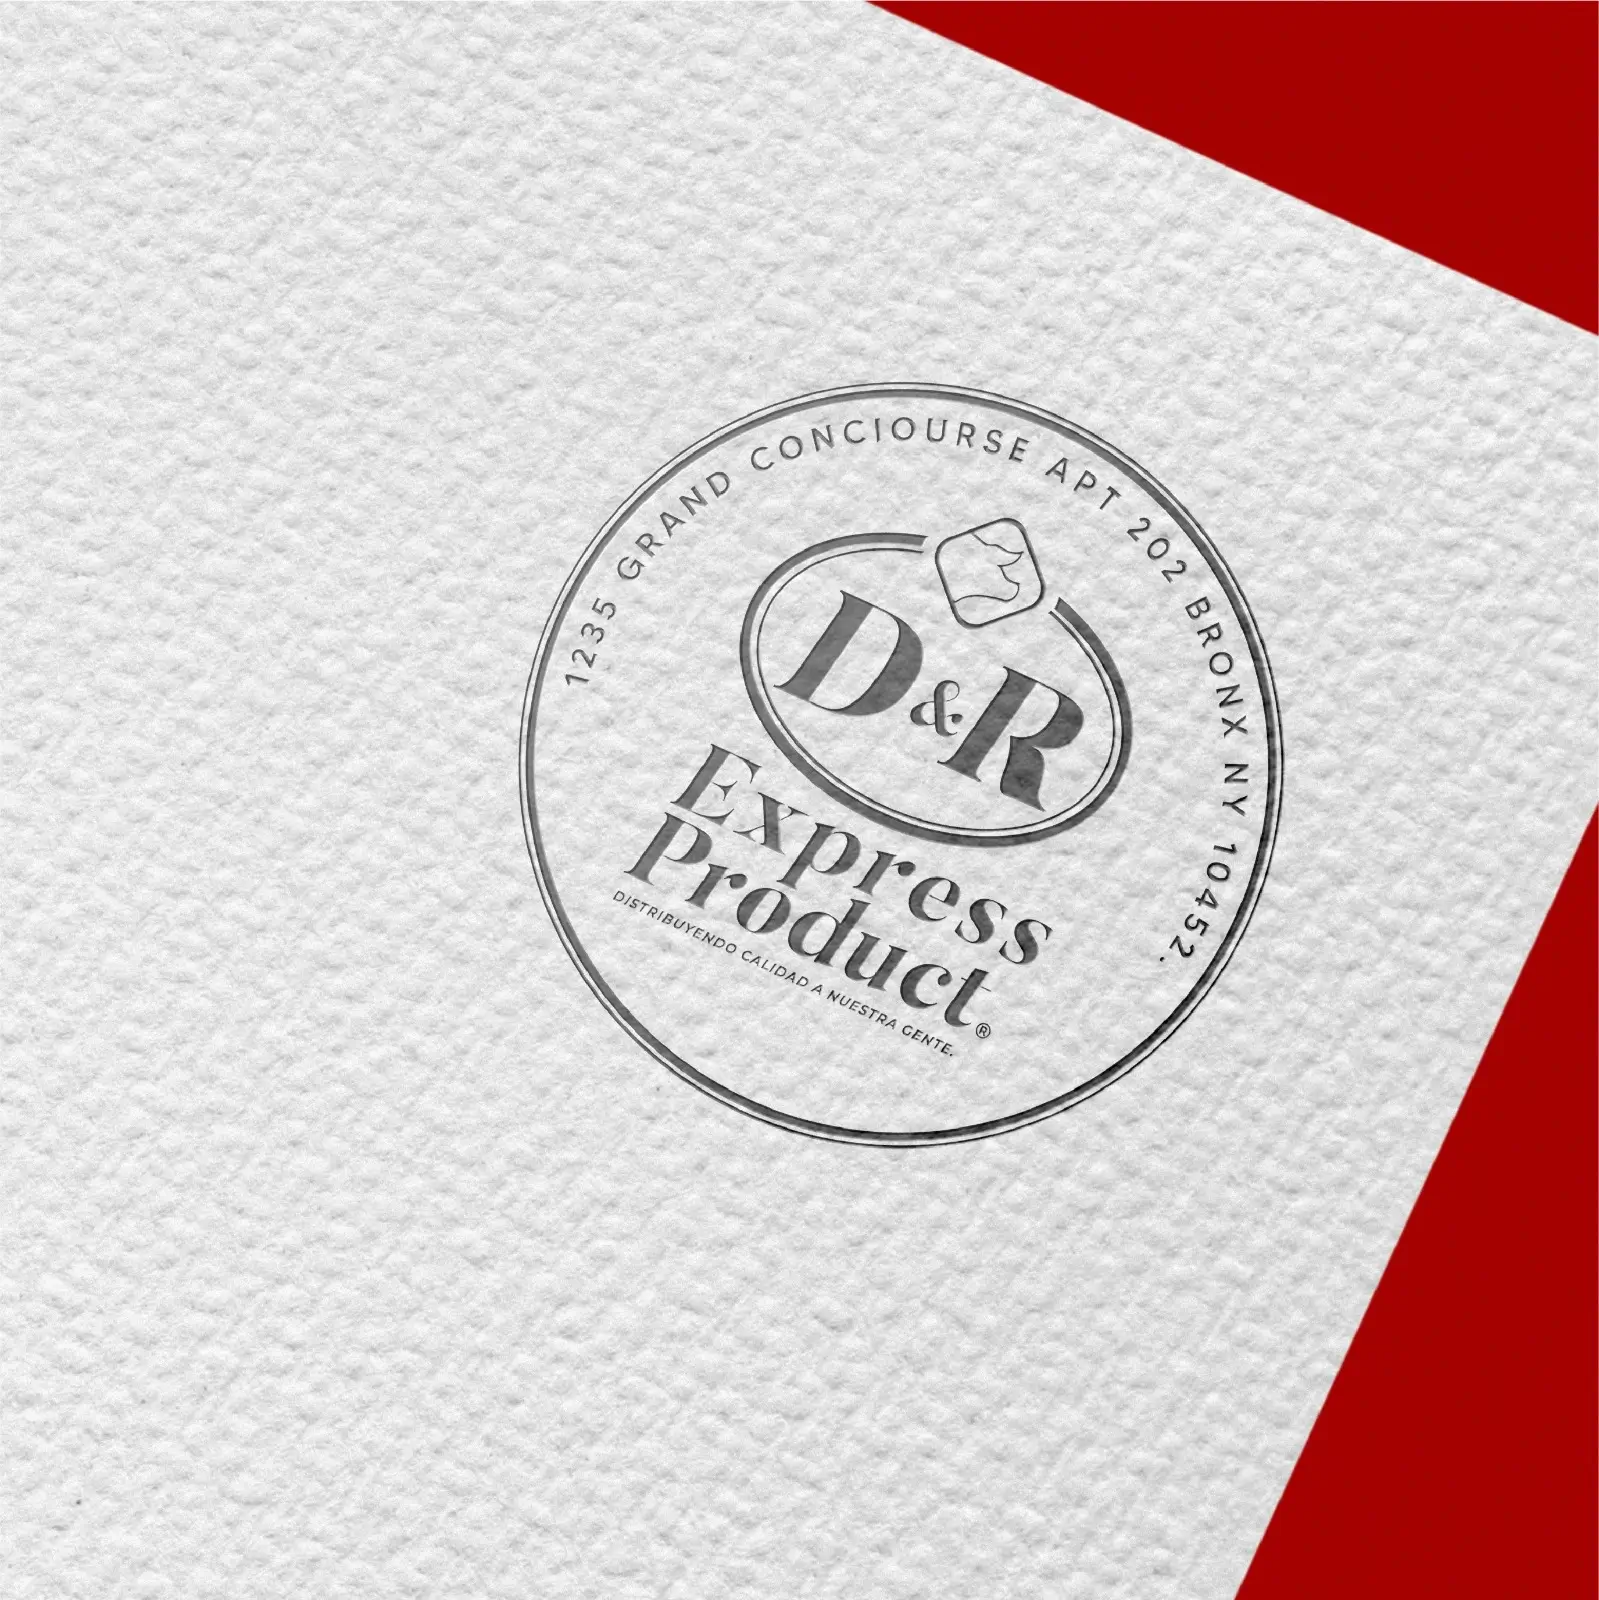 D&R Express Logo On Paper